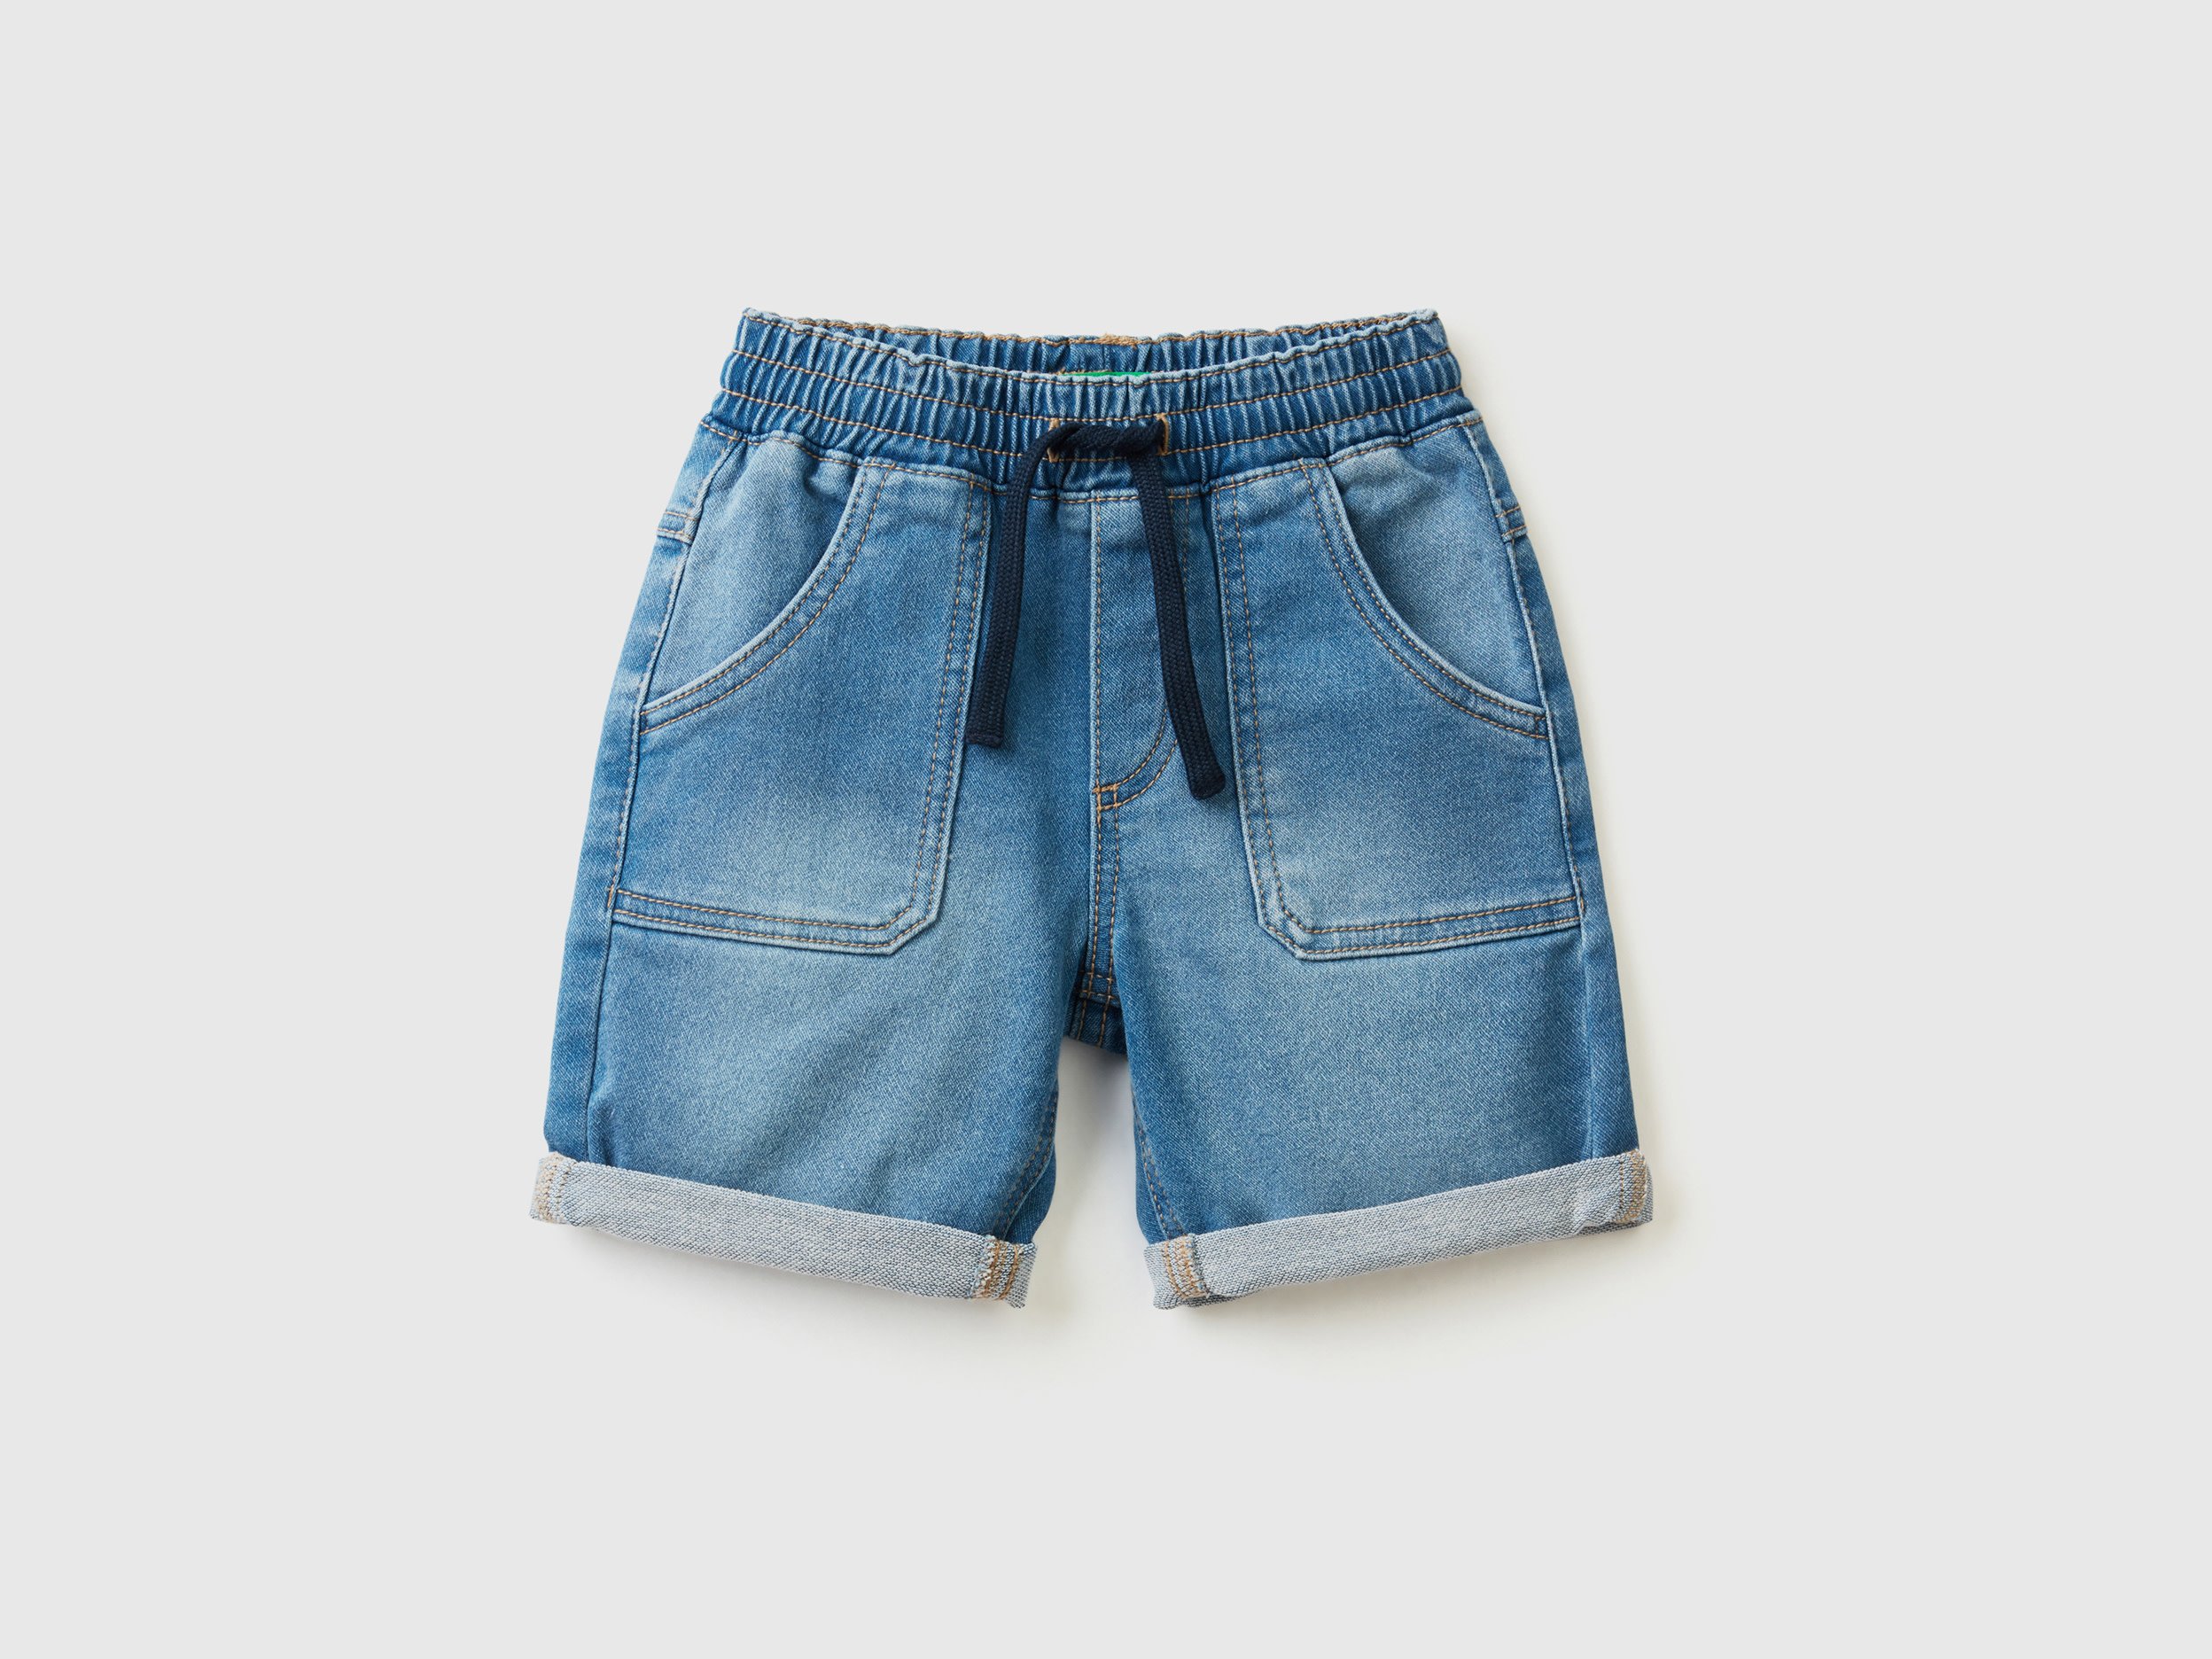 Benetton, Shorts In Stretch Denim, size 3-4, Light Blue, Kids